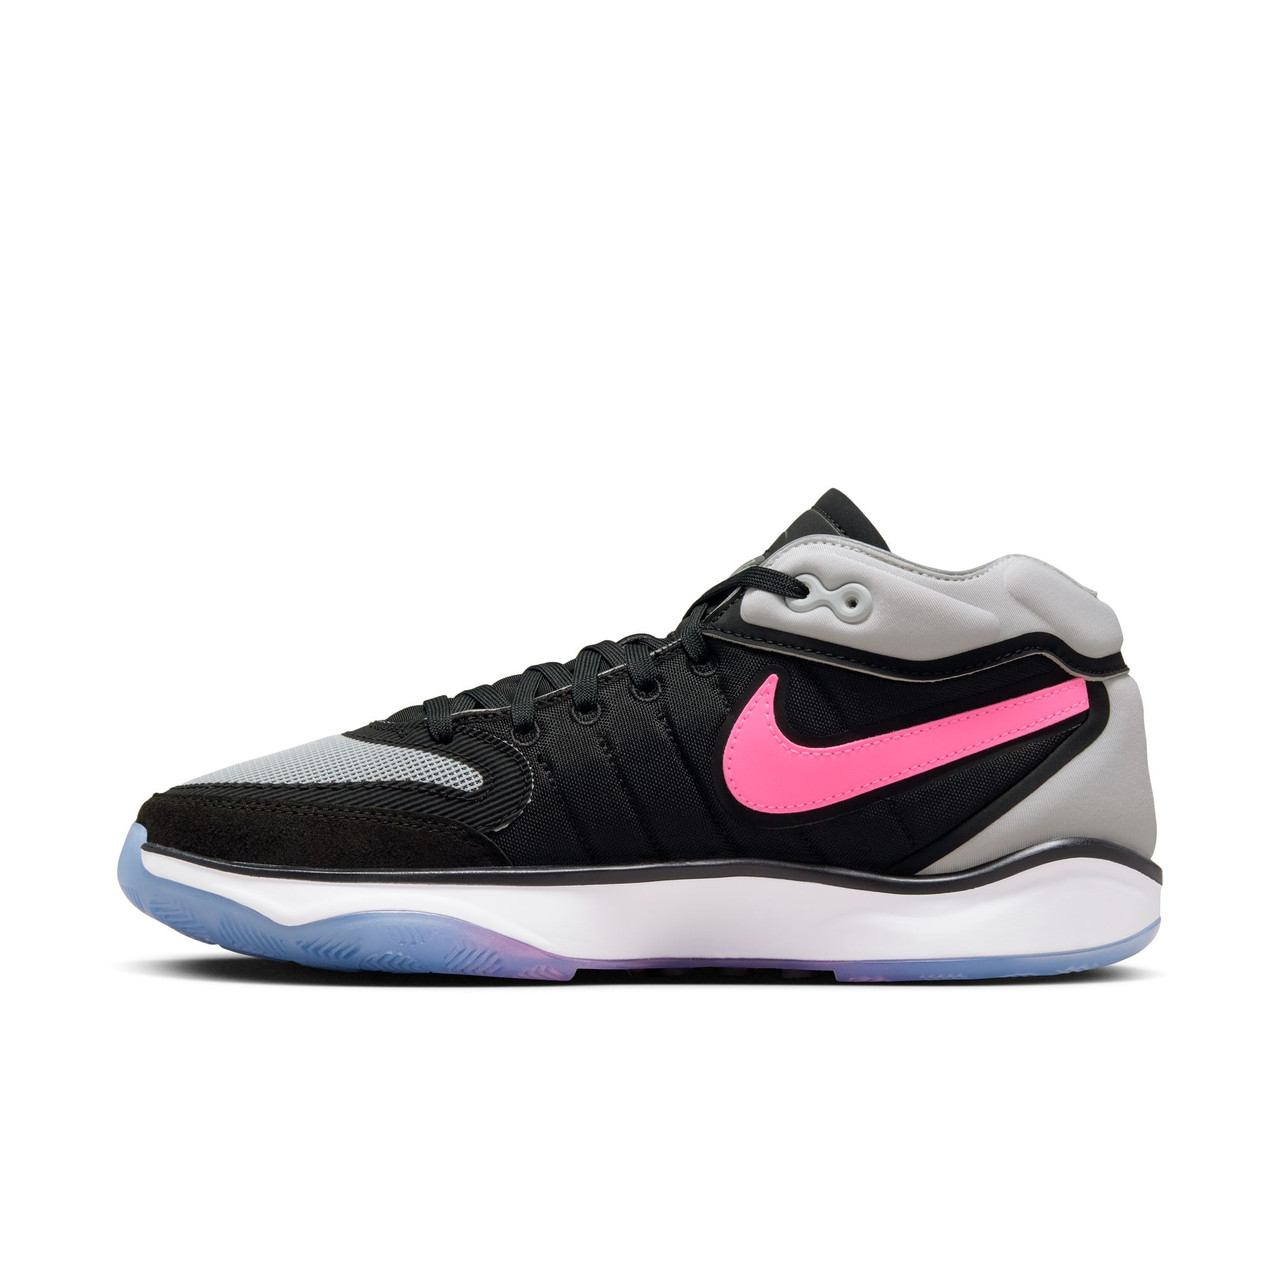 San Antonio Spurs Women's Nike G.T. Hustle 2 Shoes - Black